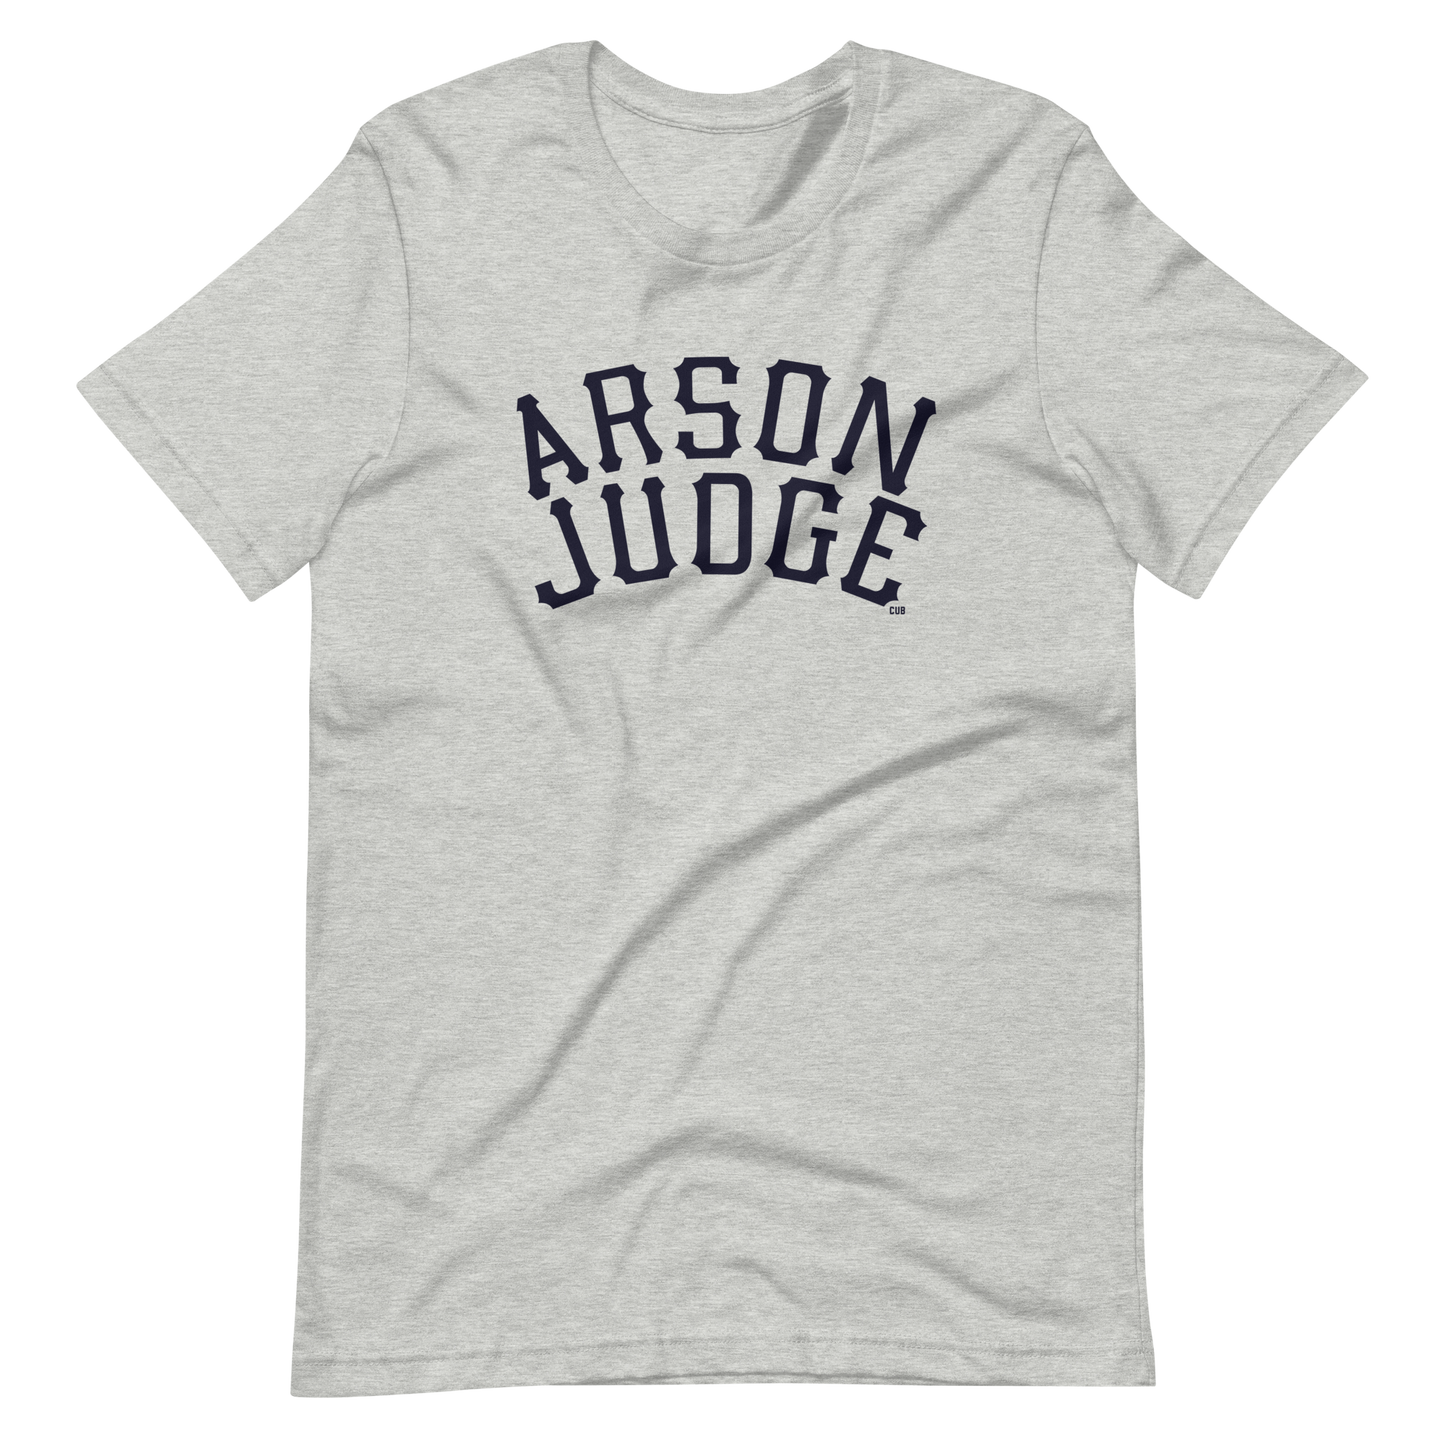 Arson Judge T-Shirt